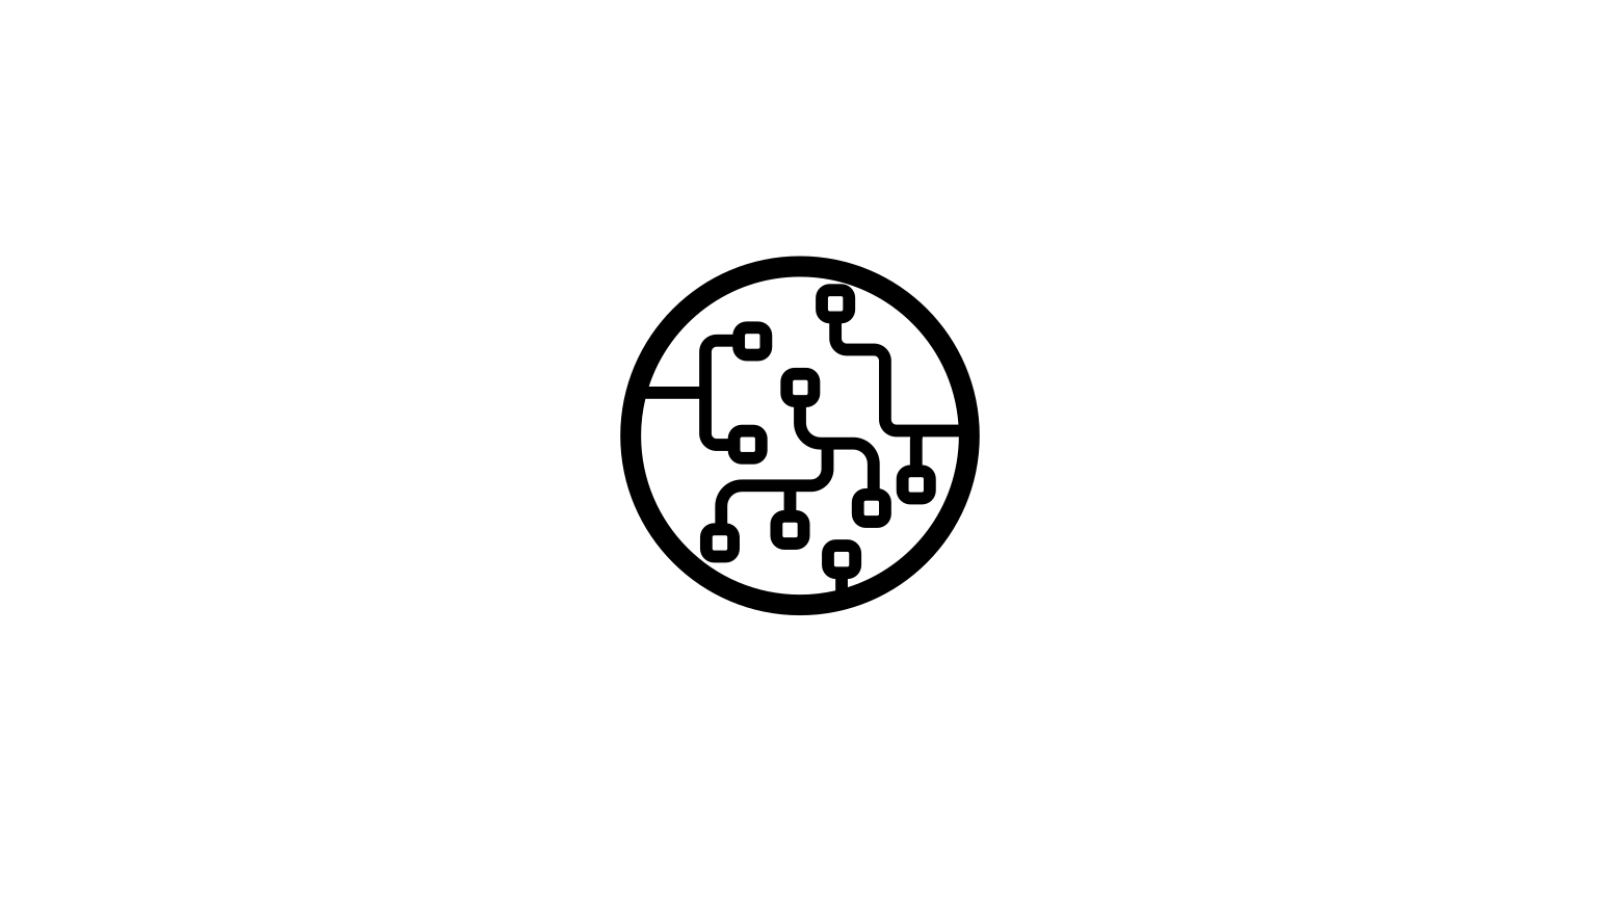 Artificial Intelligence icon by Oksana Latysheva from NounProject.com